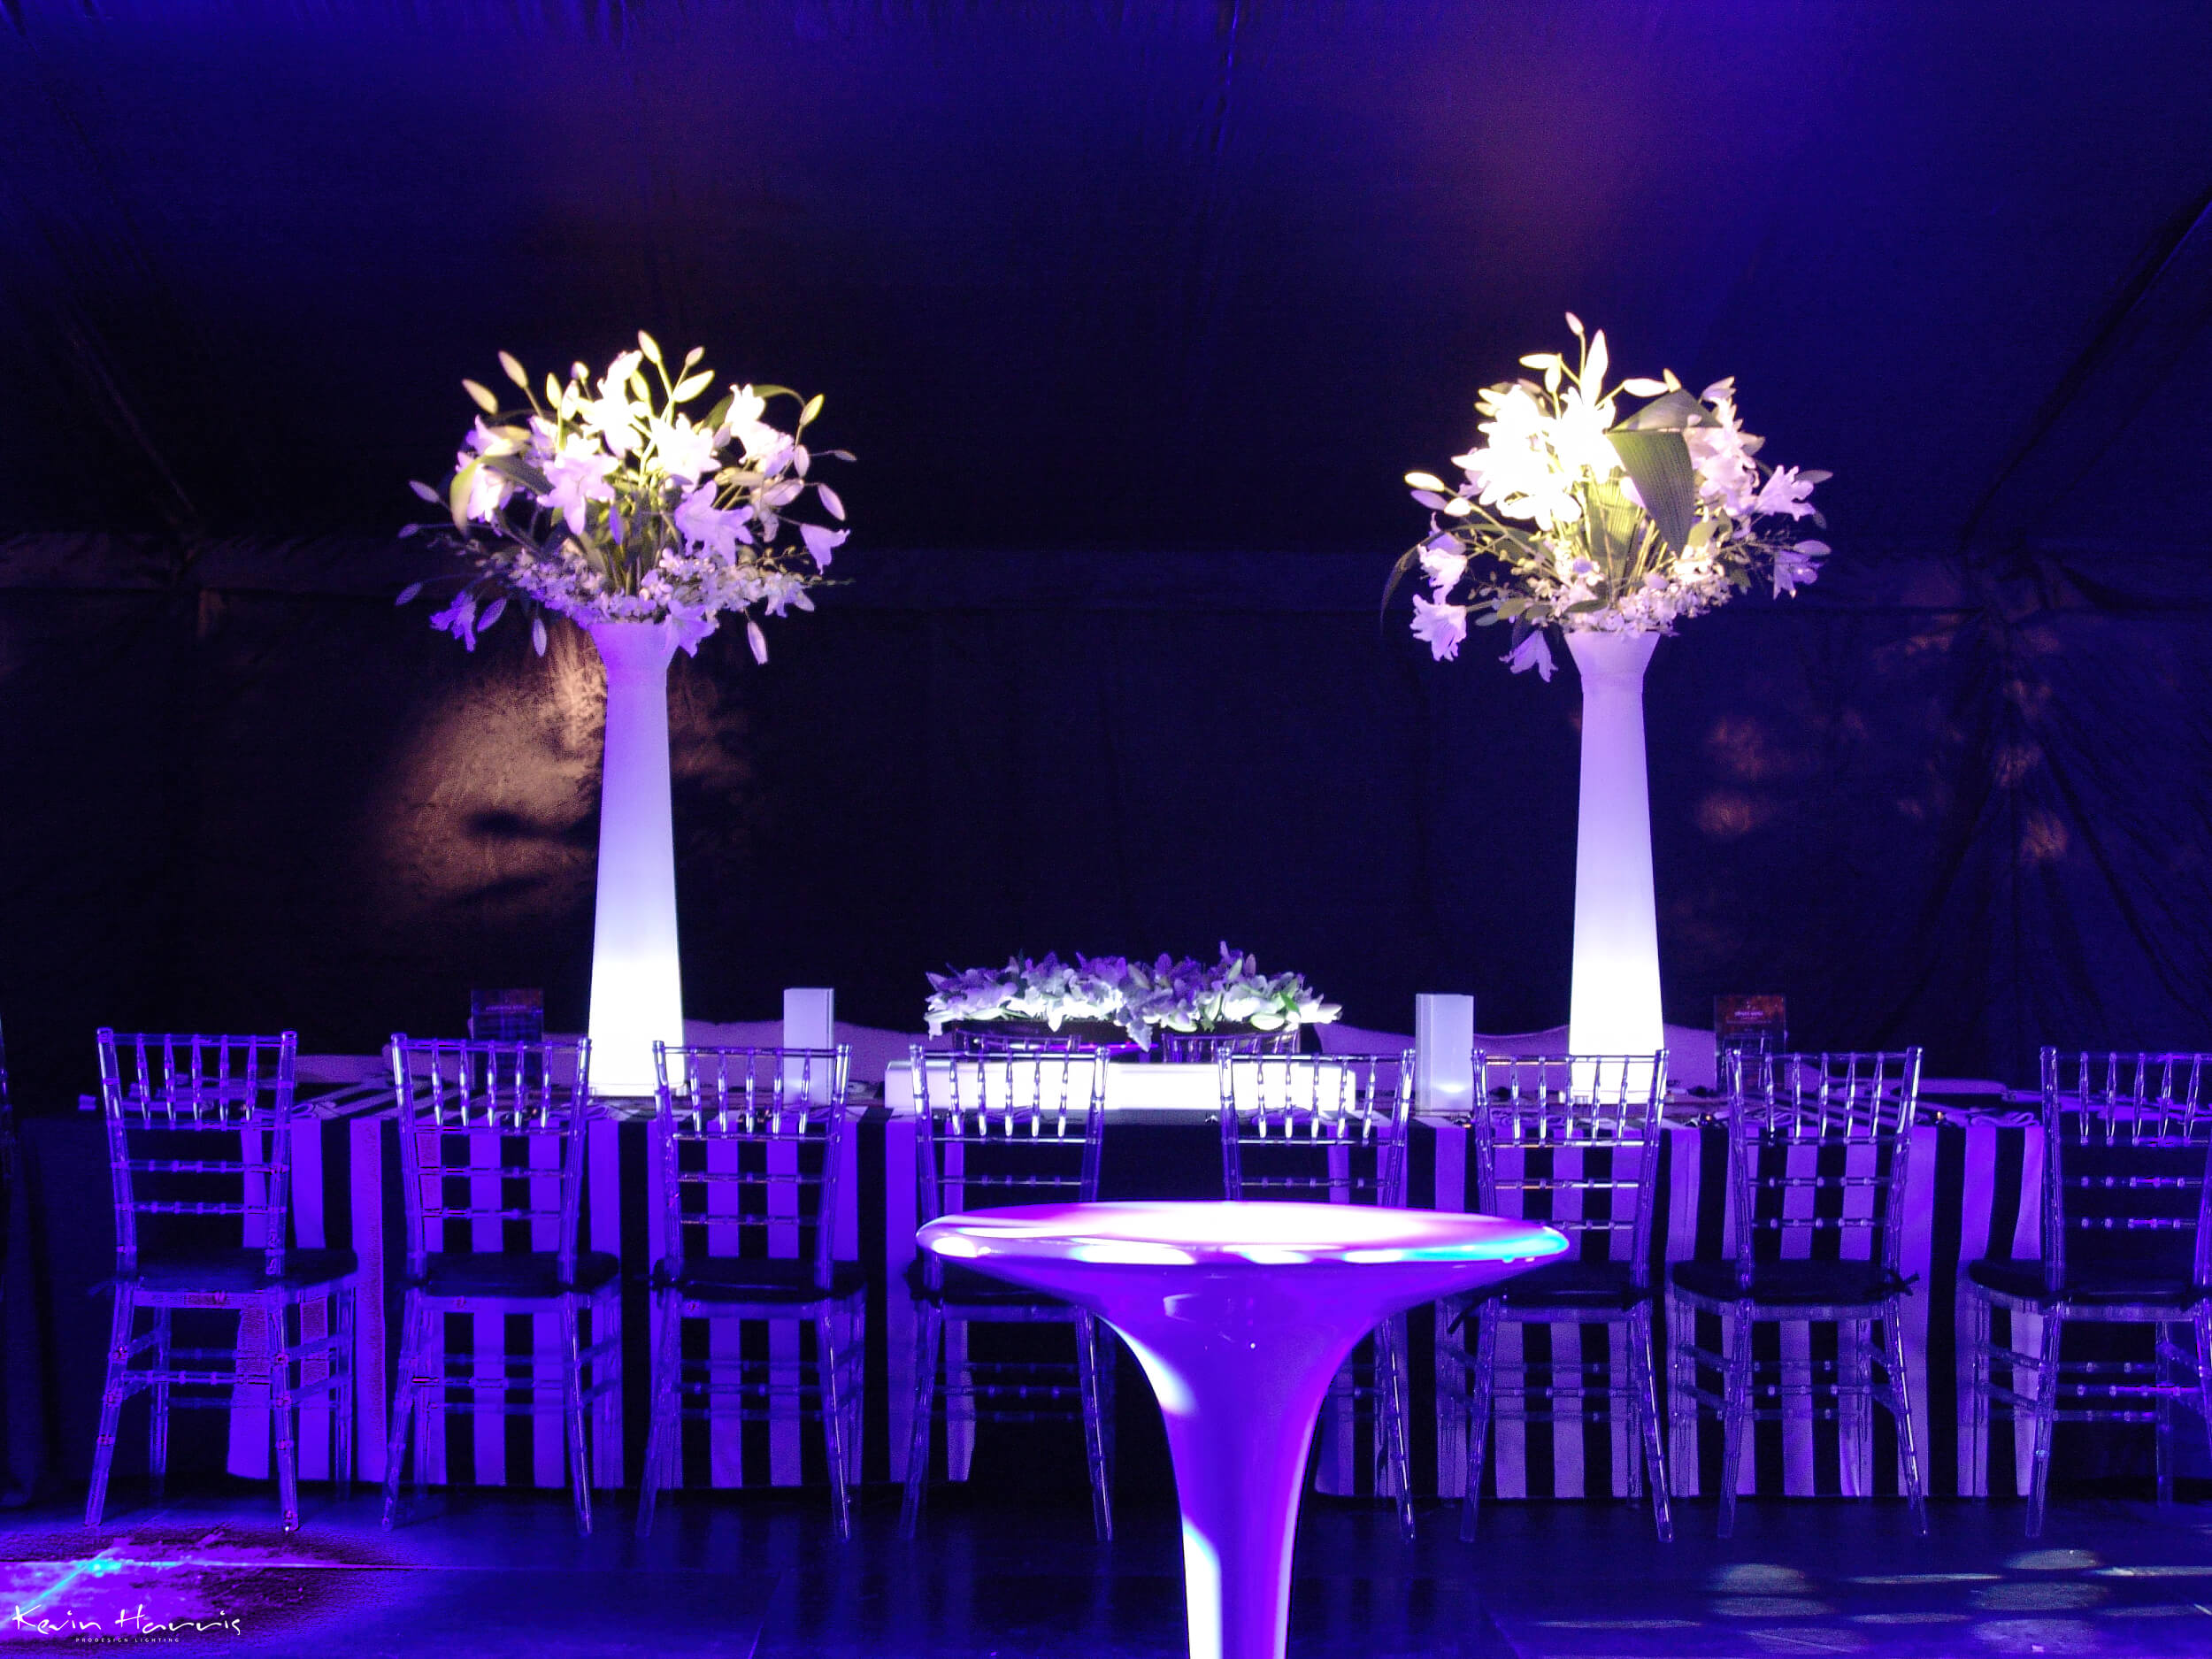 Marsh / Doepel Wedding Lighting Event Image 6